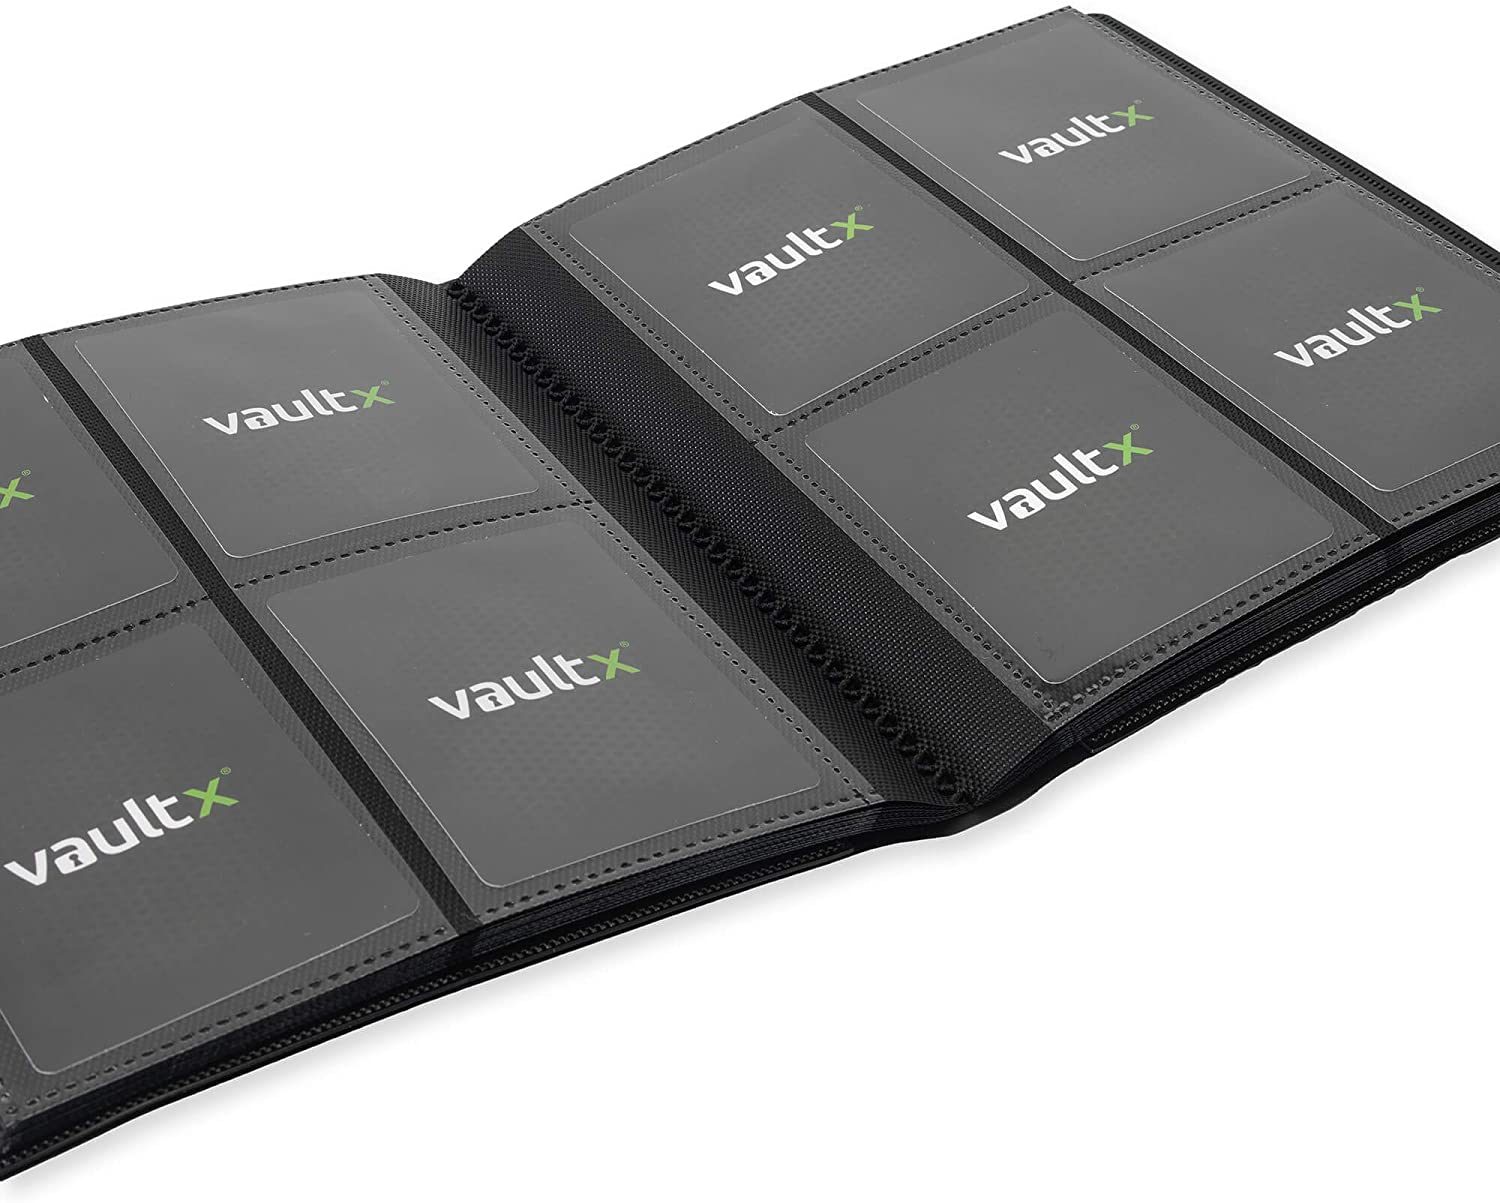 Vault X 4 Pocket Card Binder